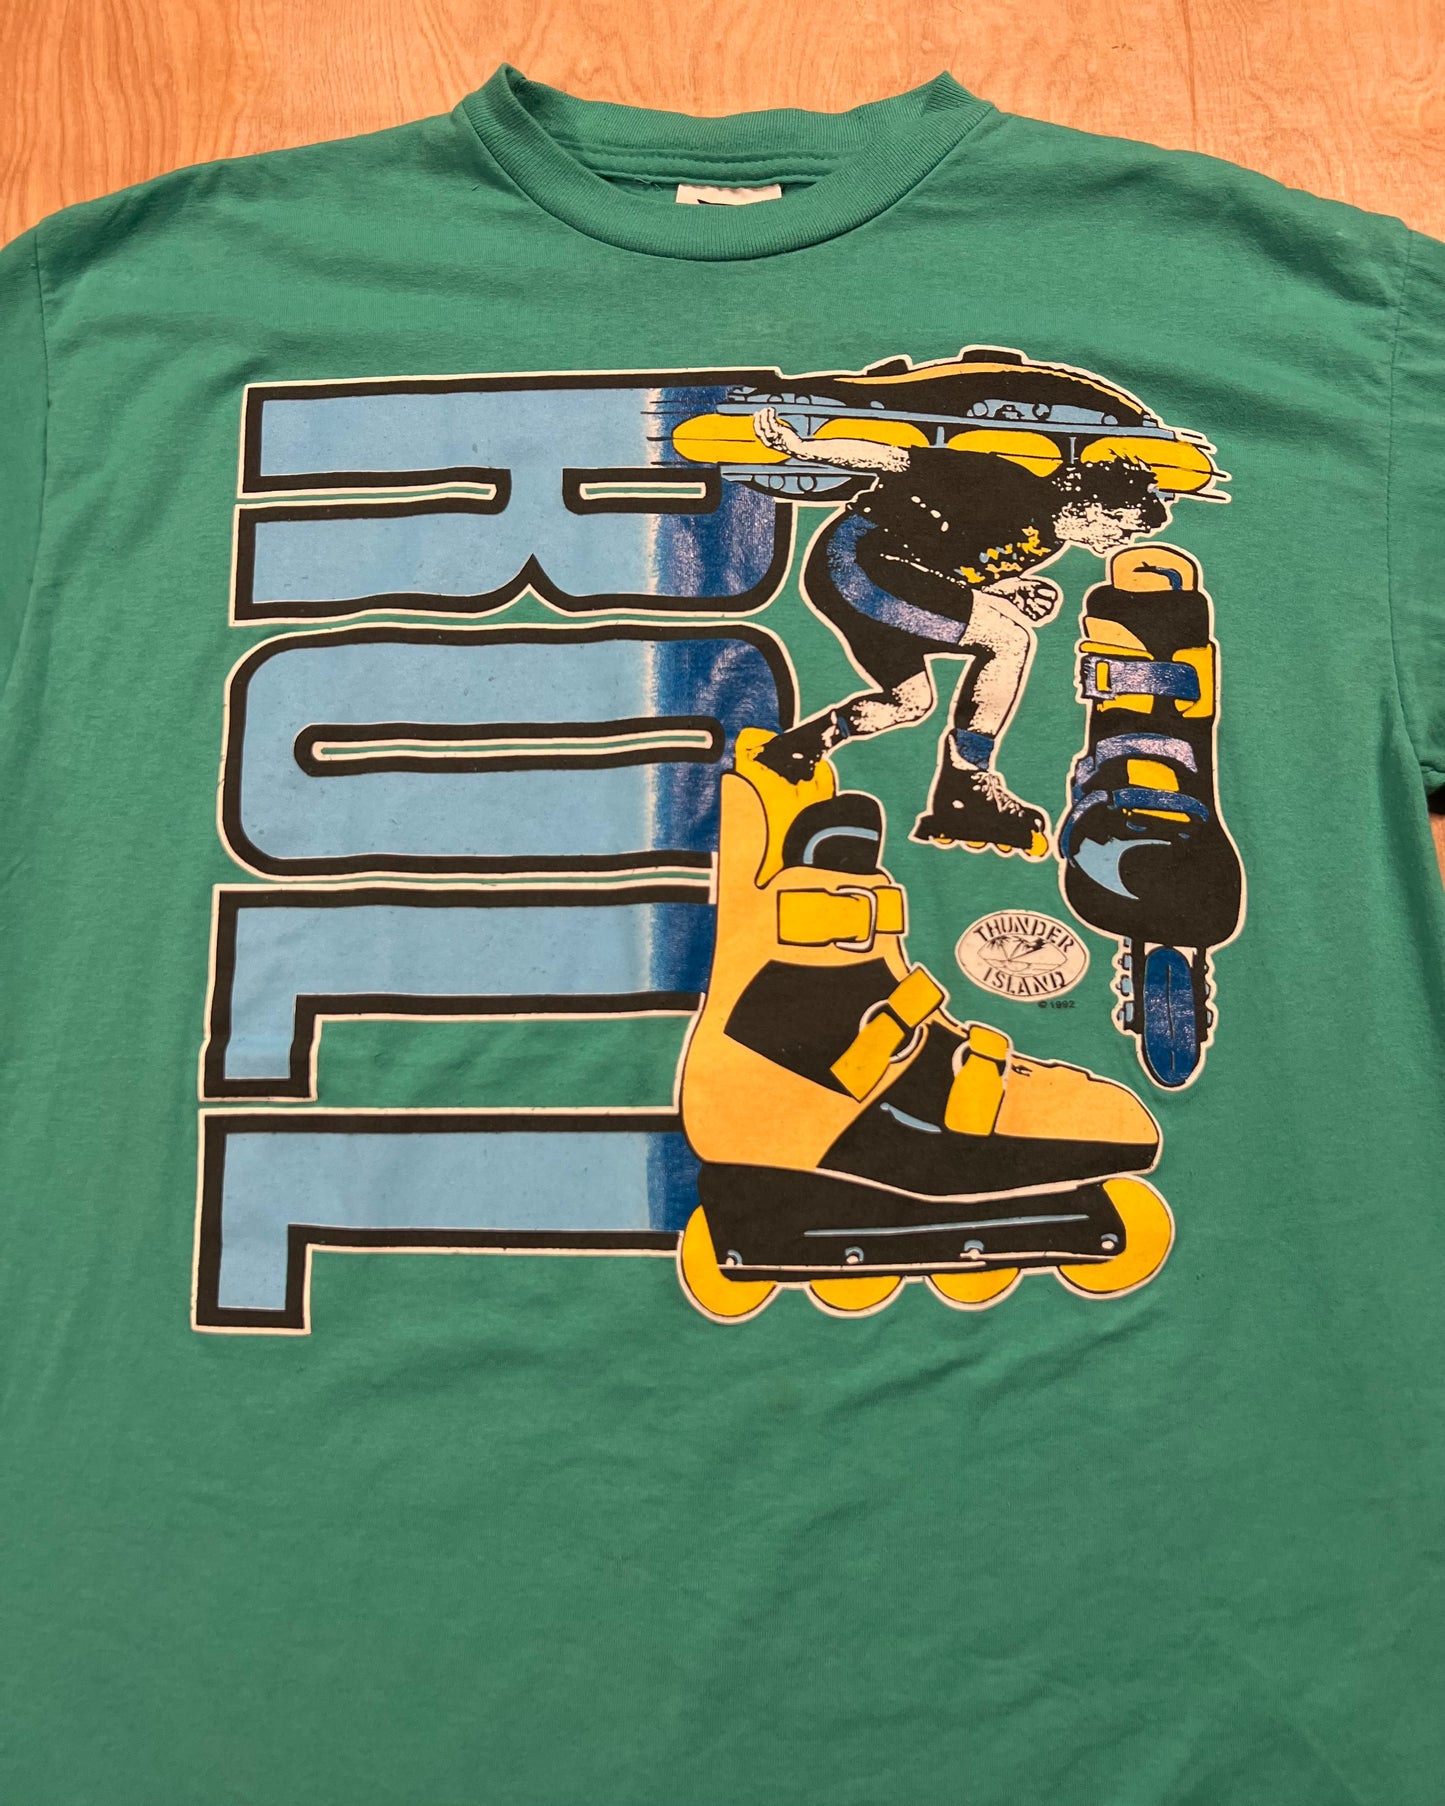 1992 Thunder Island "Roll" Single Stitch Rollerblading T-Shirt